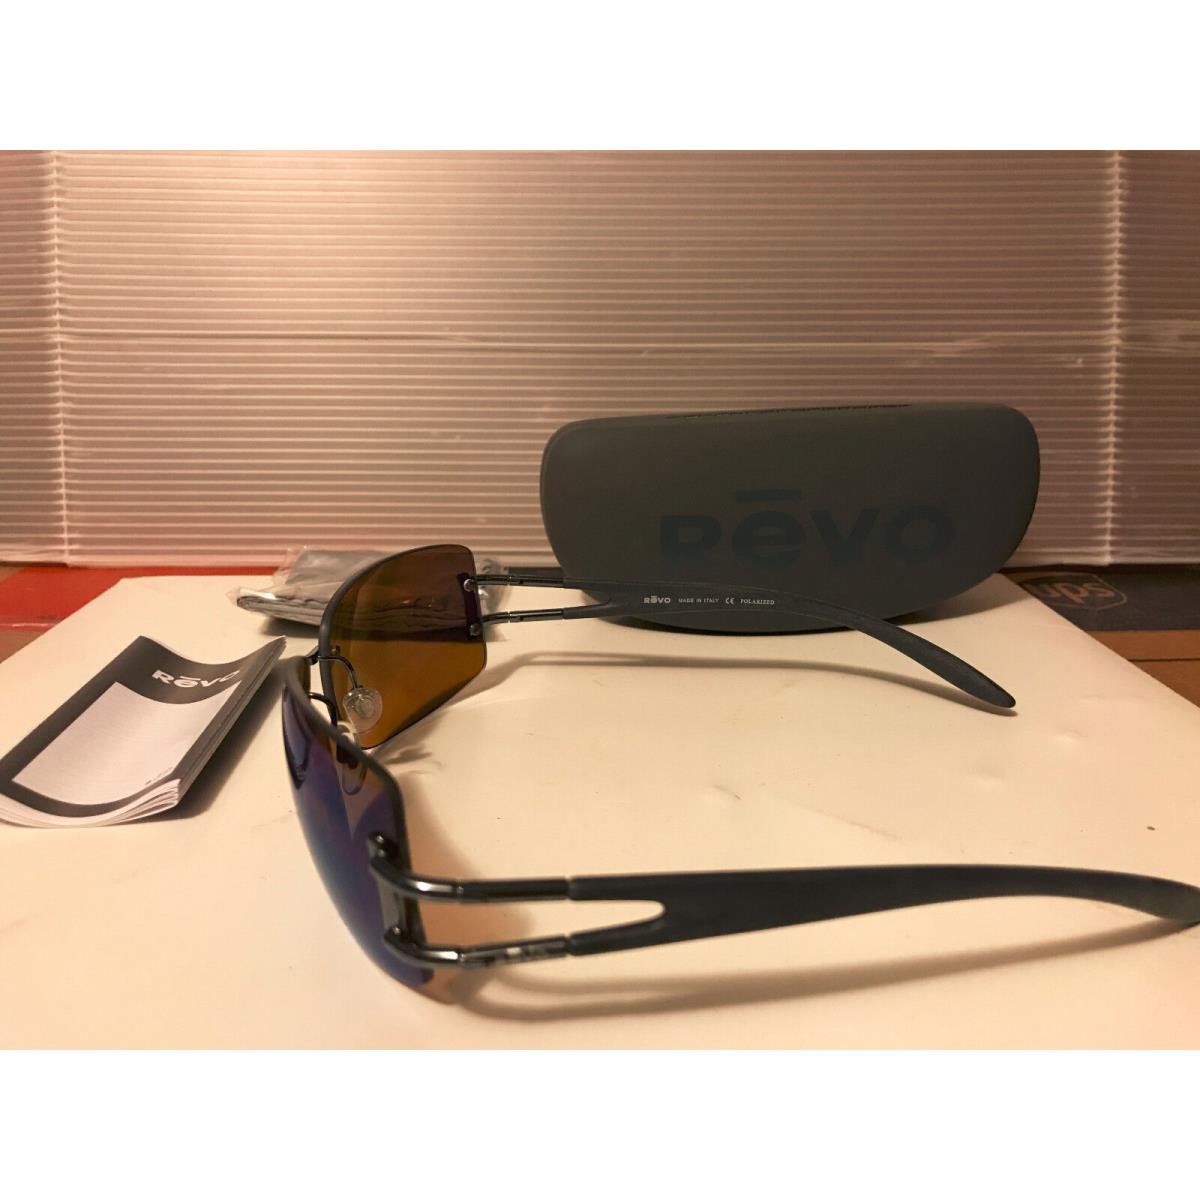 Revo sunglasses  - Metallic Blue Frame, Polarized Blue Brown Gradient Mirror Lens